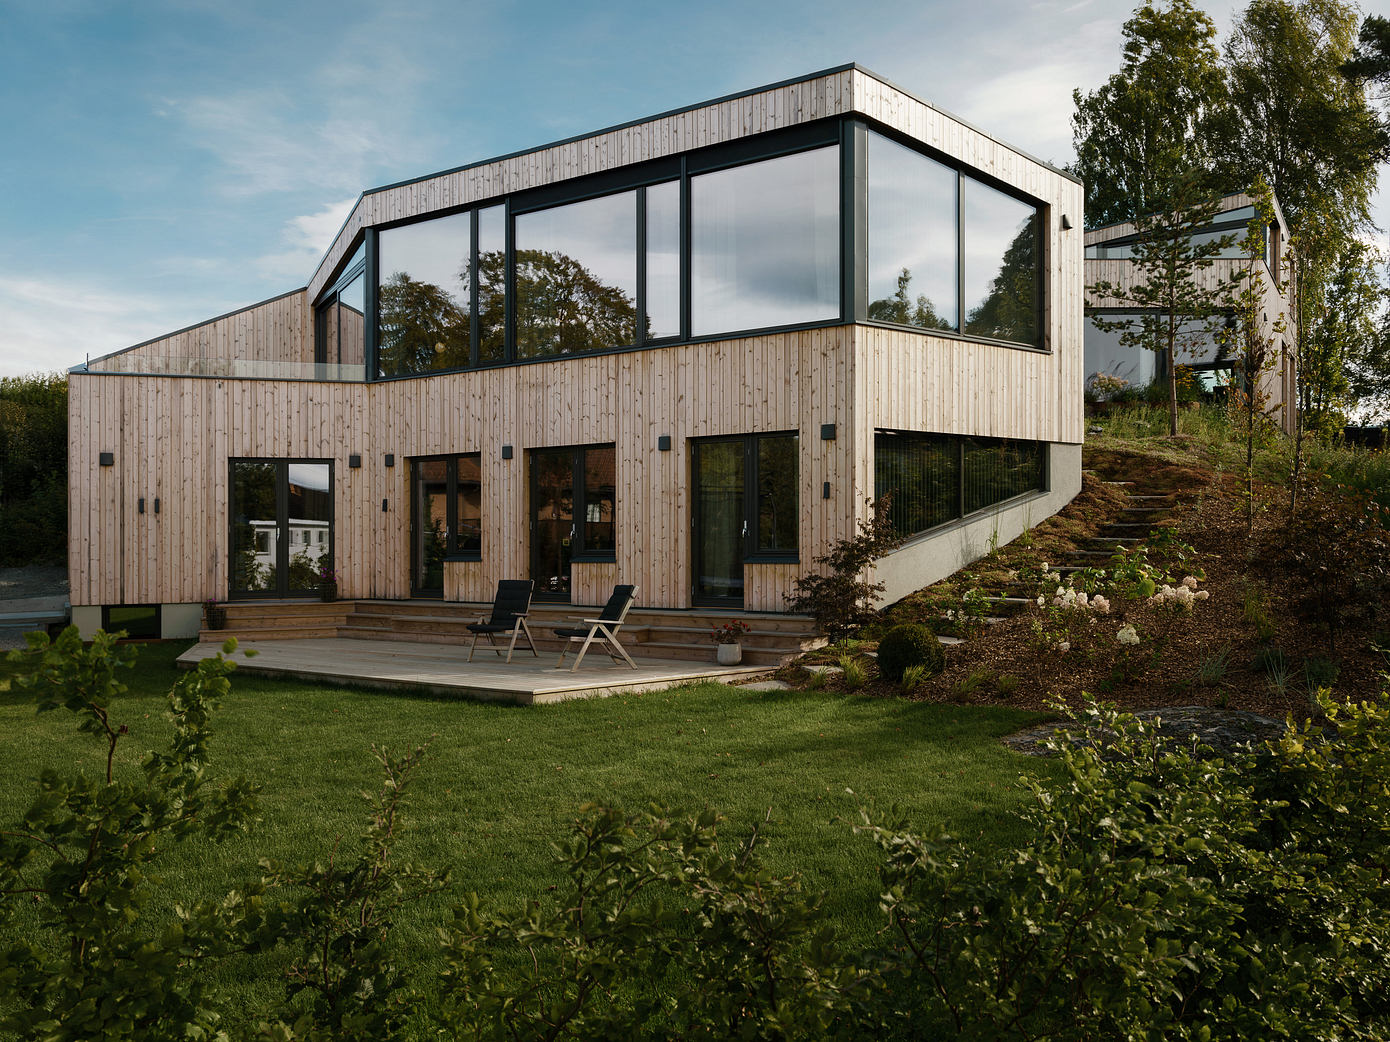 Flesaasveien: Elegant Timber Villas Nestled in Oslo